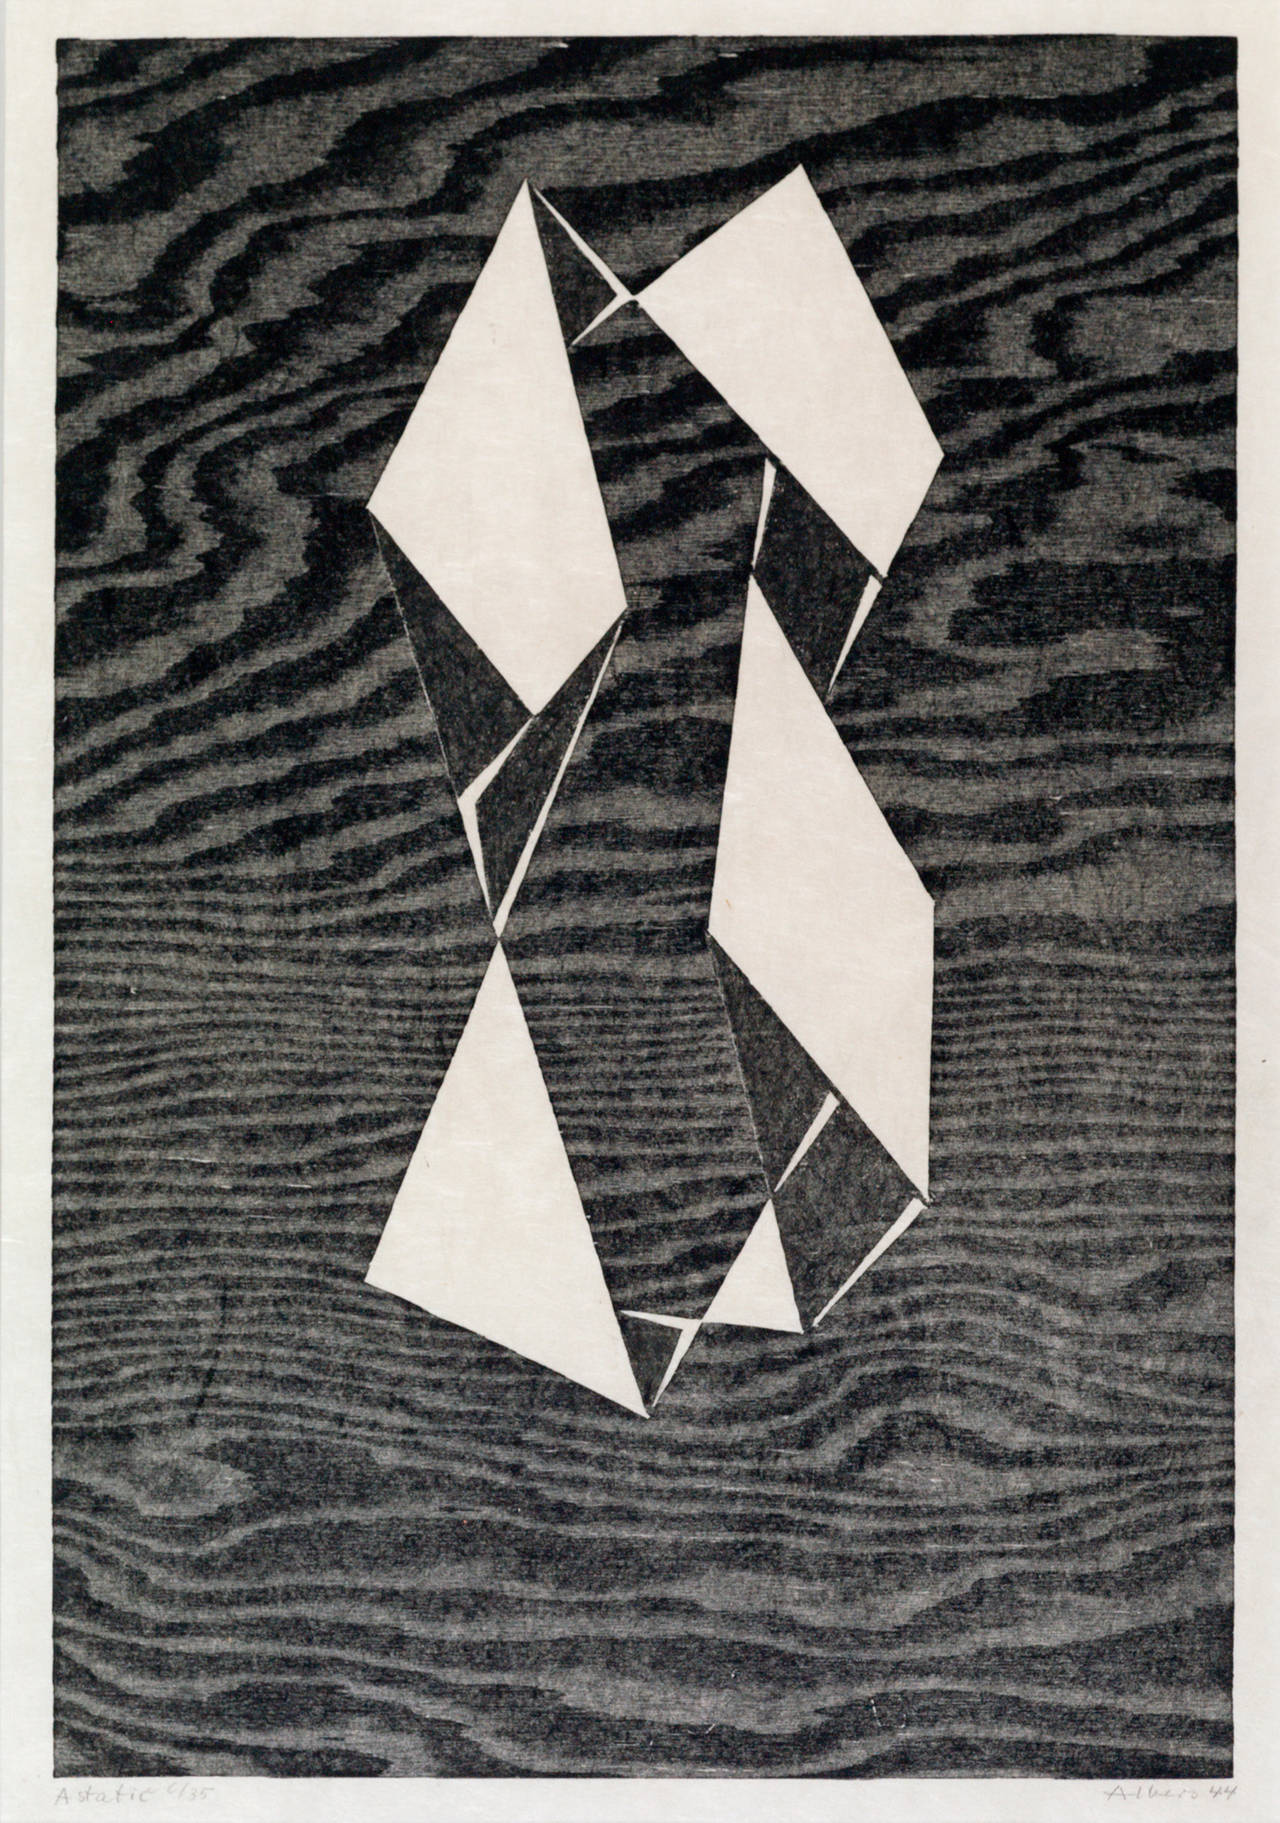 Astatic - Print by Josef Albers